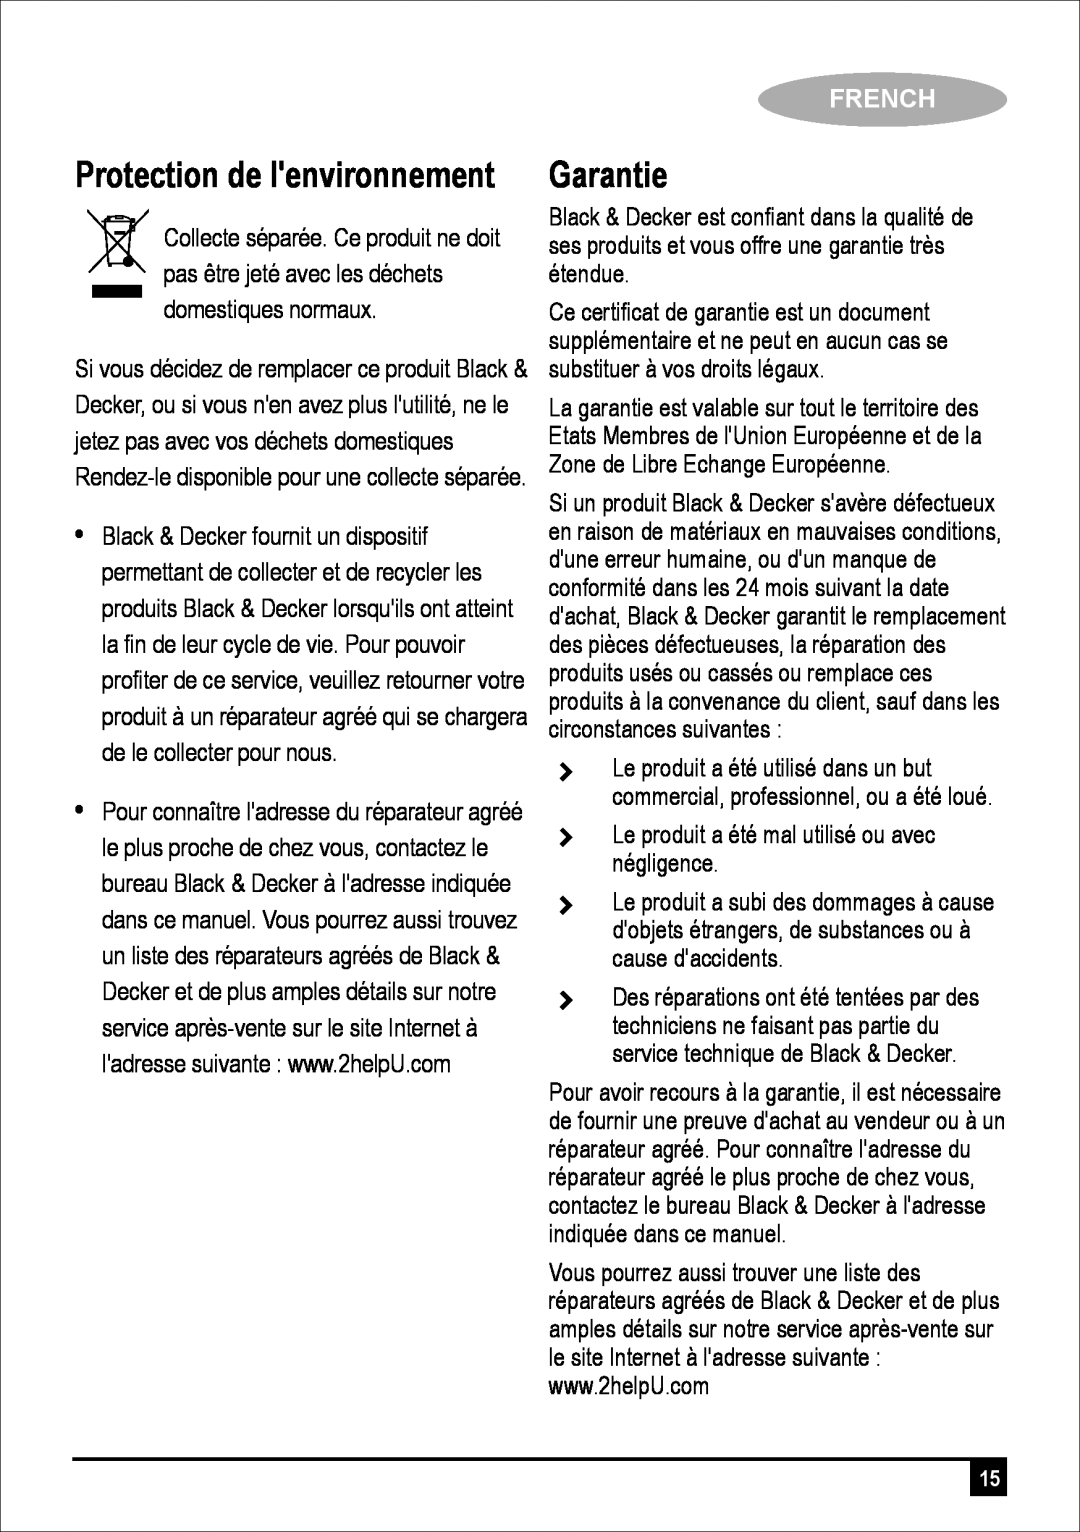 Black & Decker FC300 manual Protection de lenvironnement, Garantie, French 